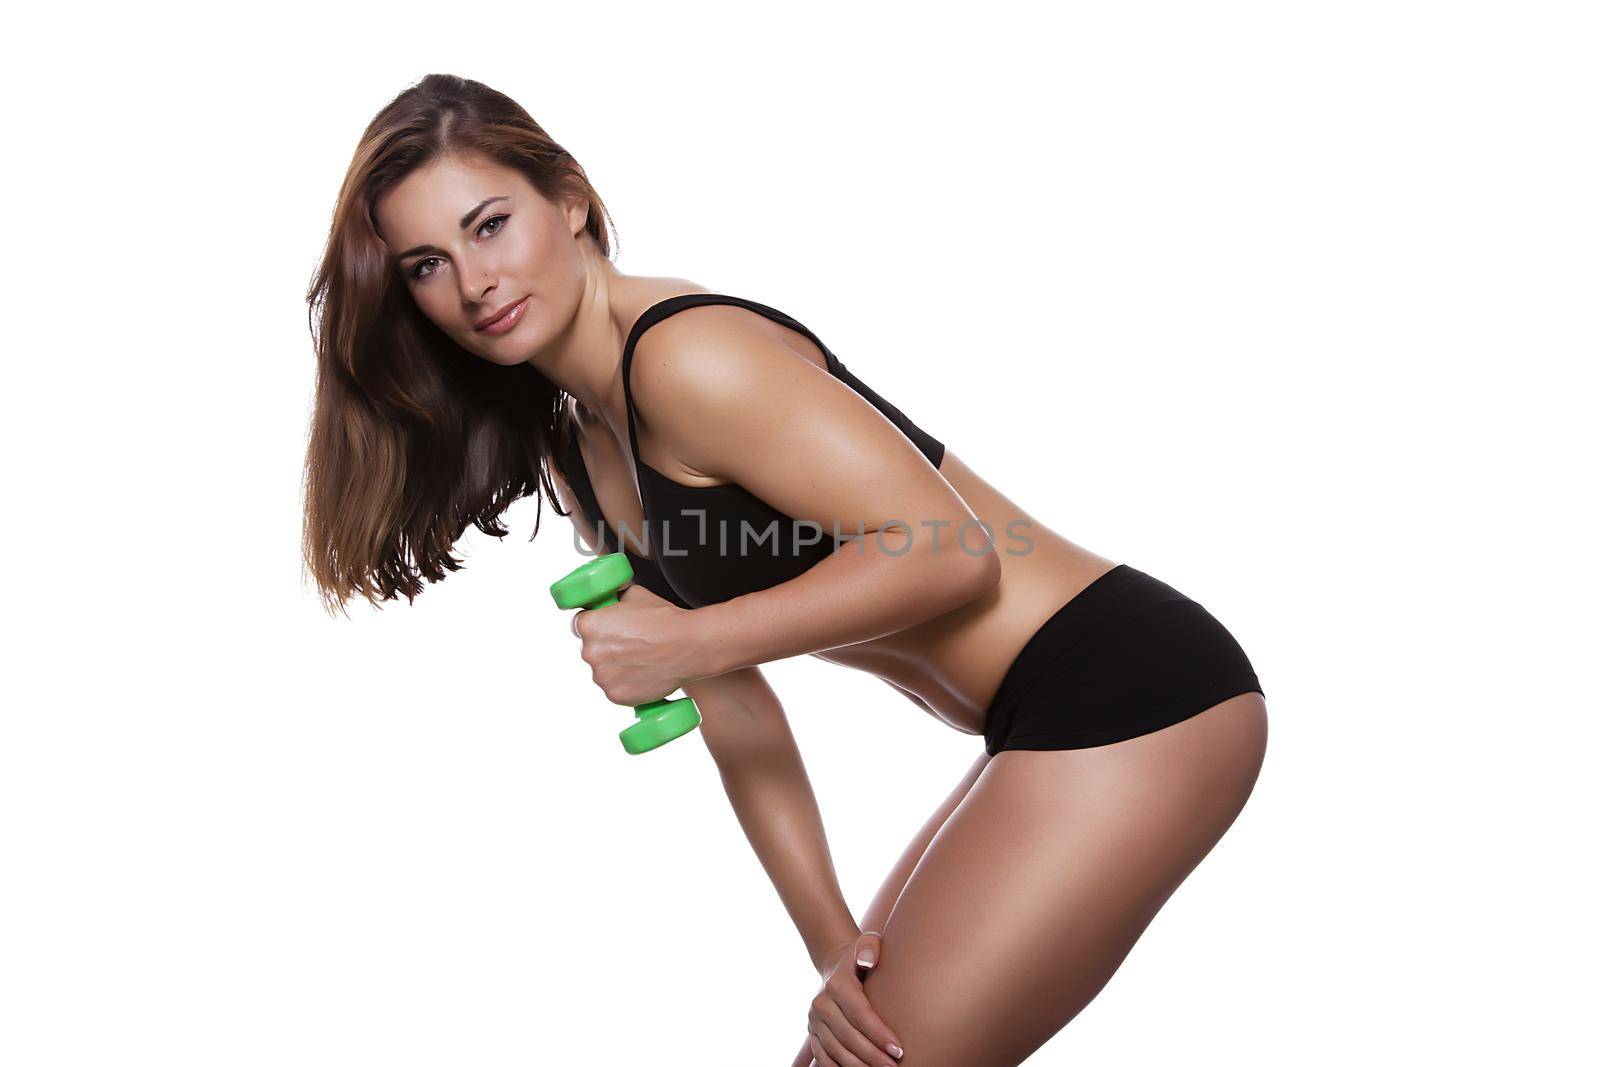 Fitness girl with dumbbells on a white background by studiodav